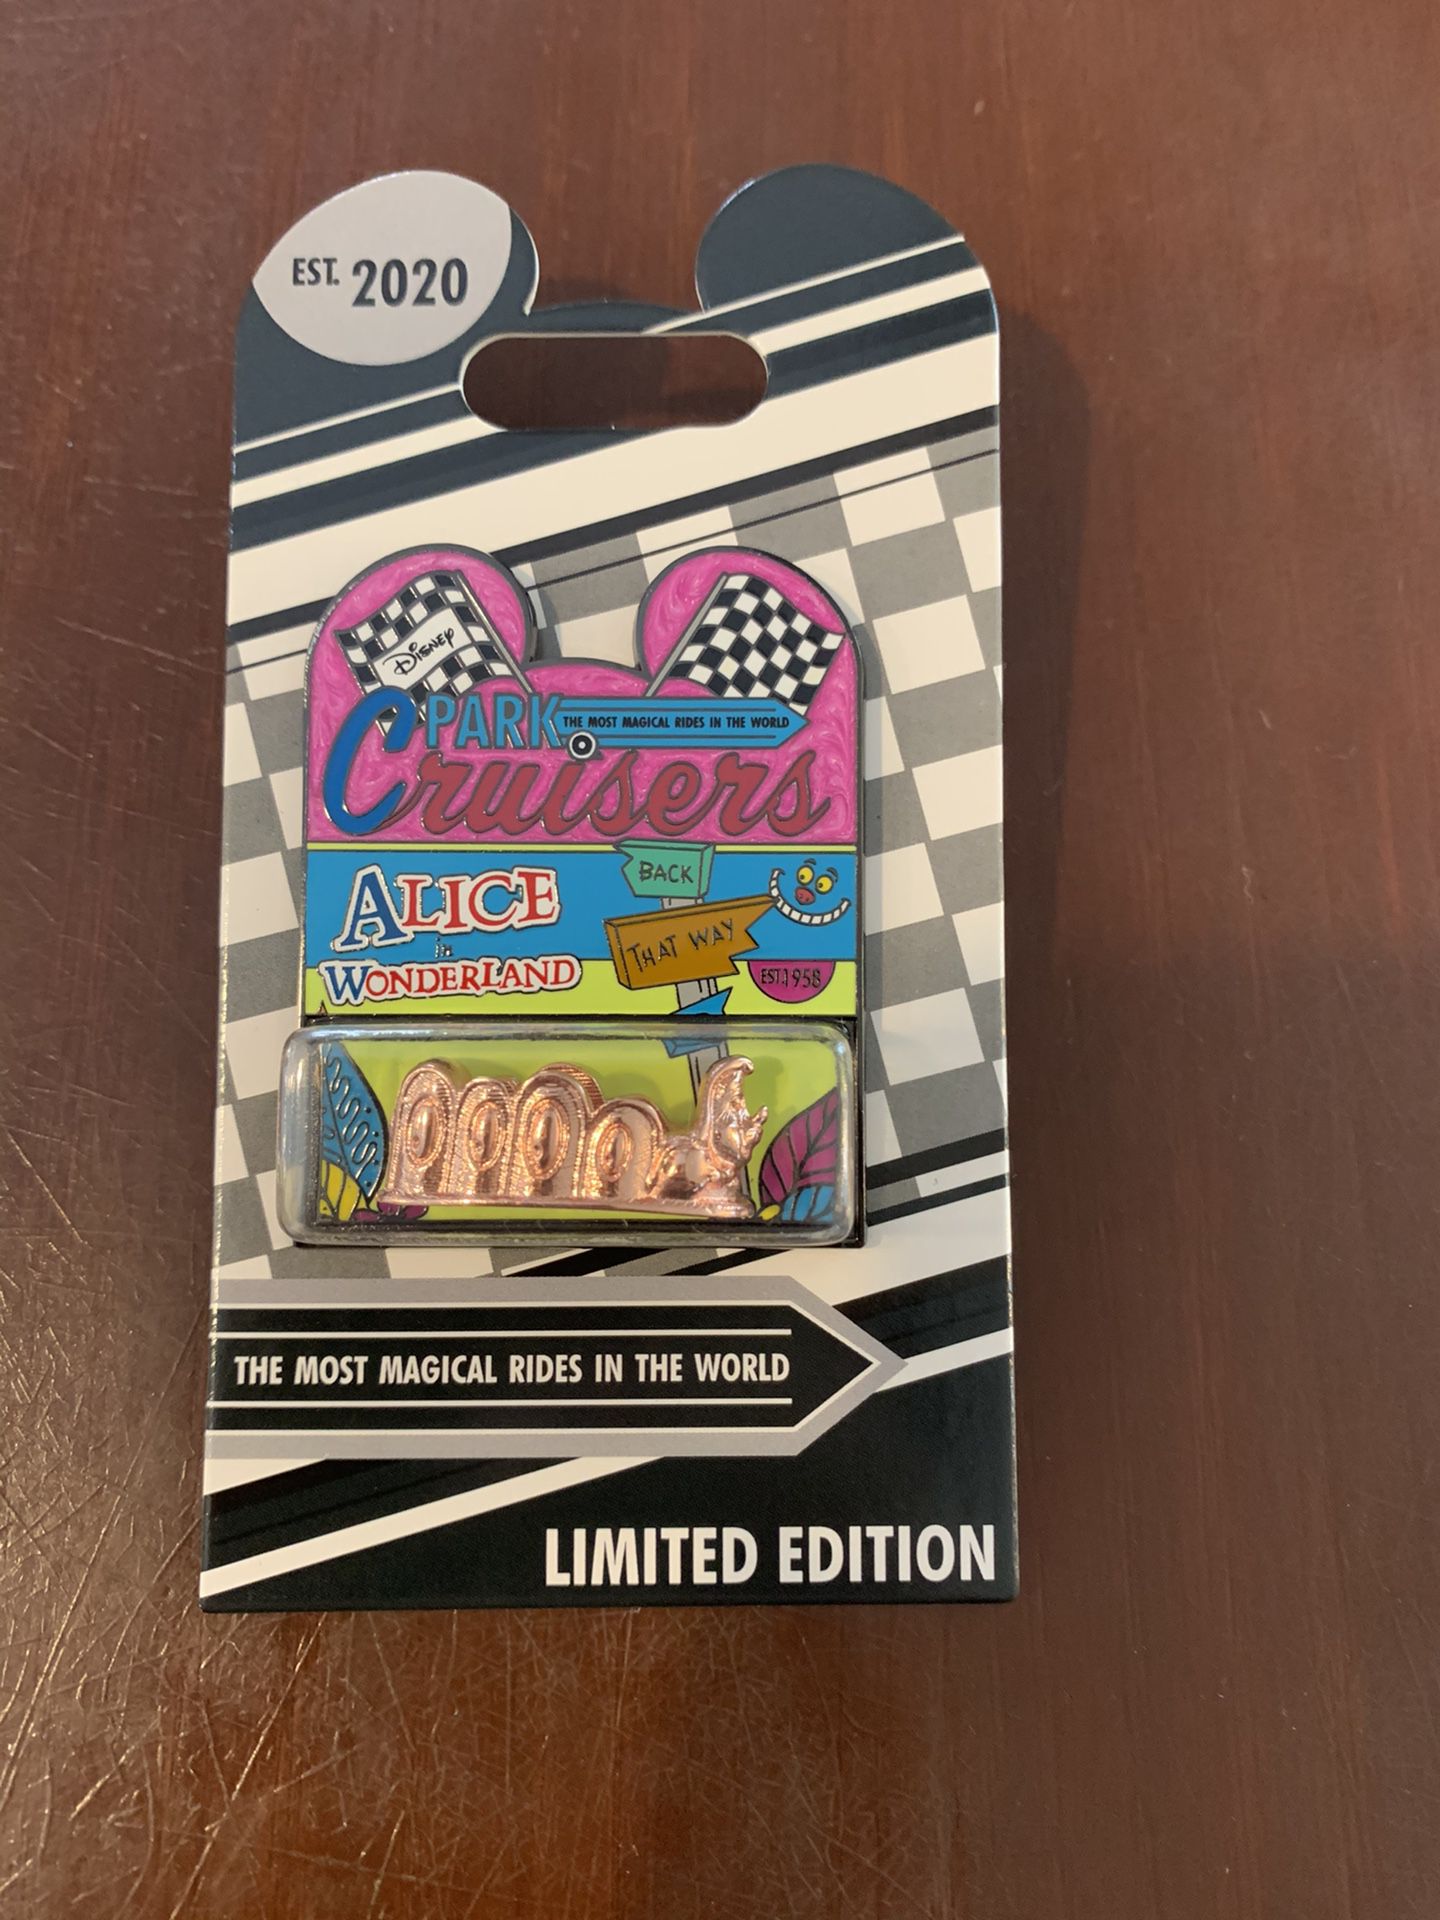 Disney Alice in wonderland cruiser pin limited edition